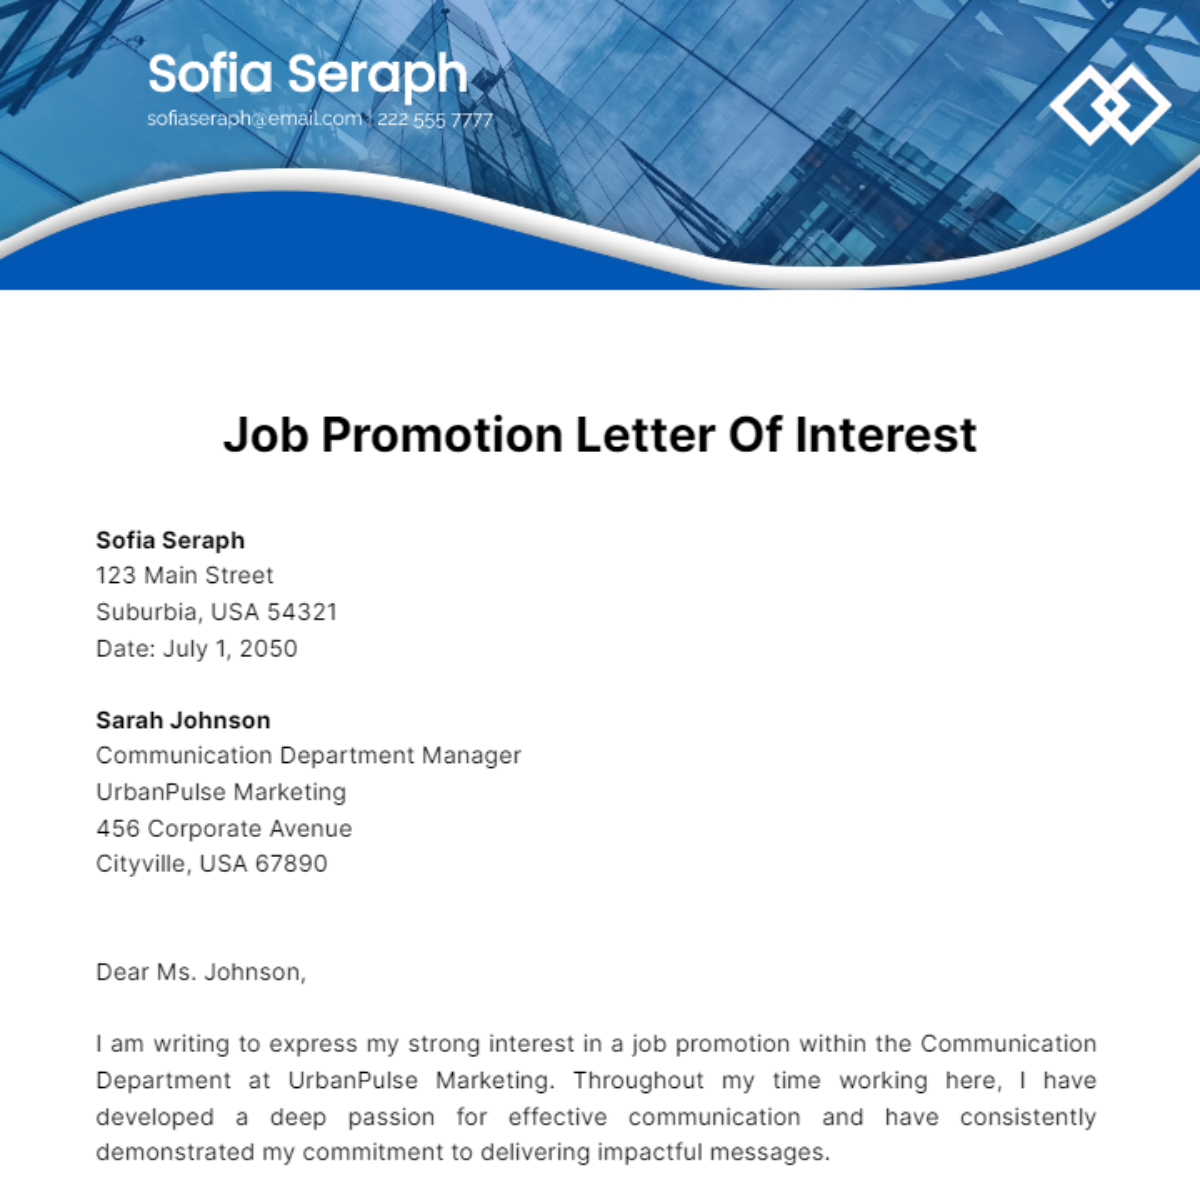 Job Promotion Letter Of Interest Template